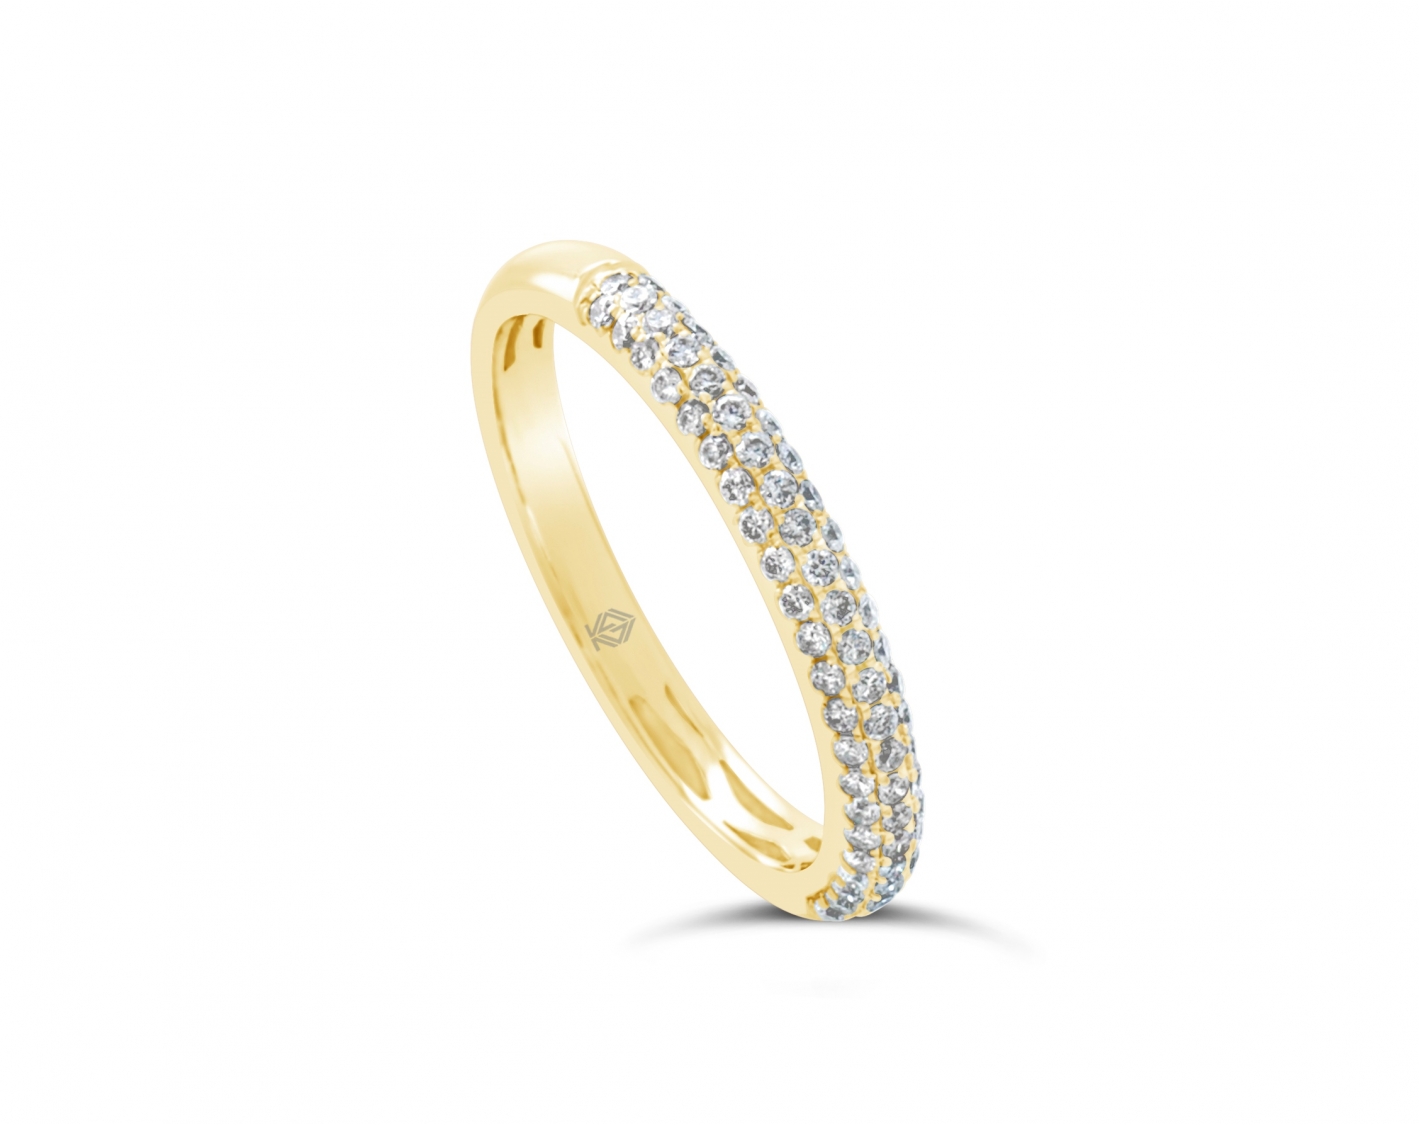 18k yellow gold 3-row bombay half eternity round shaped diamond wedding ring